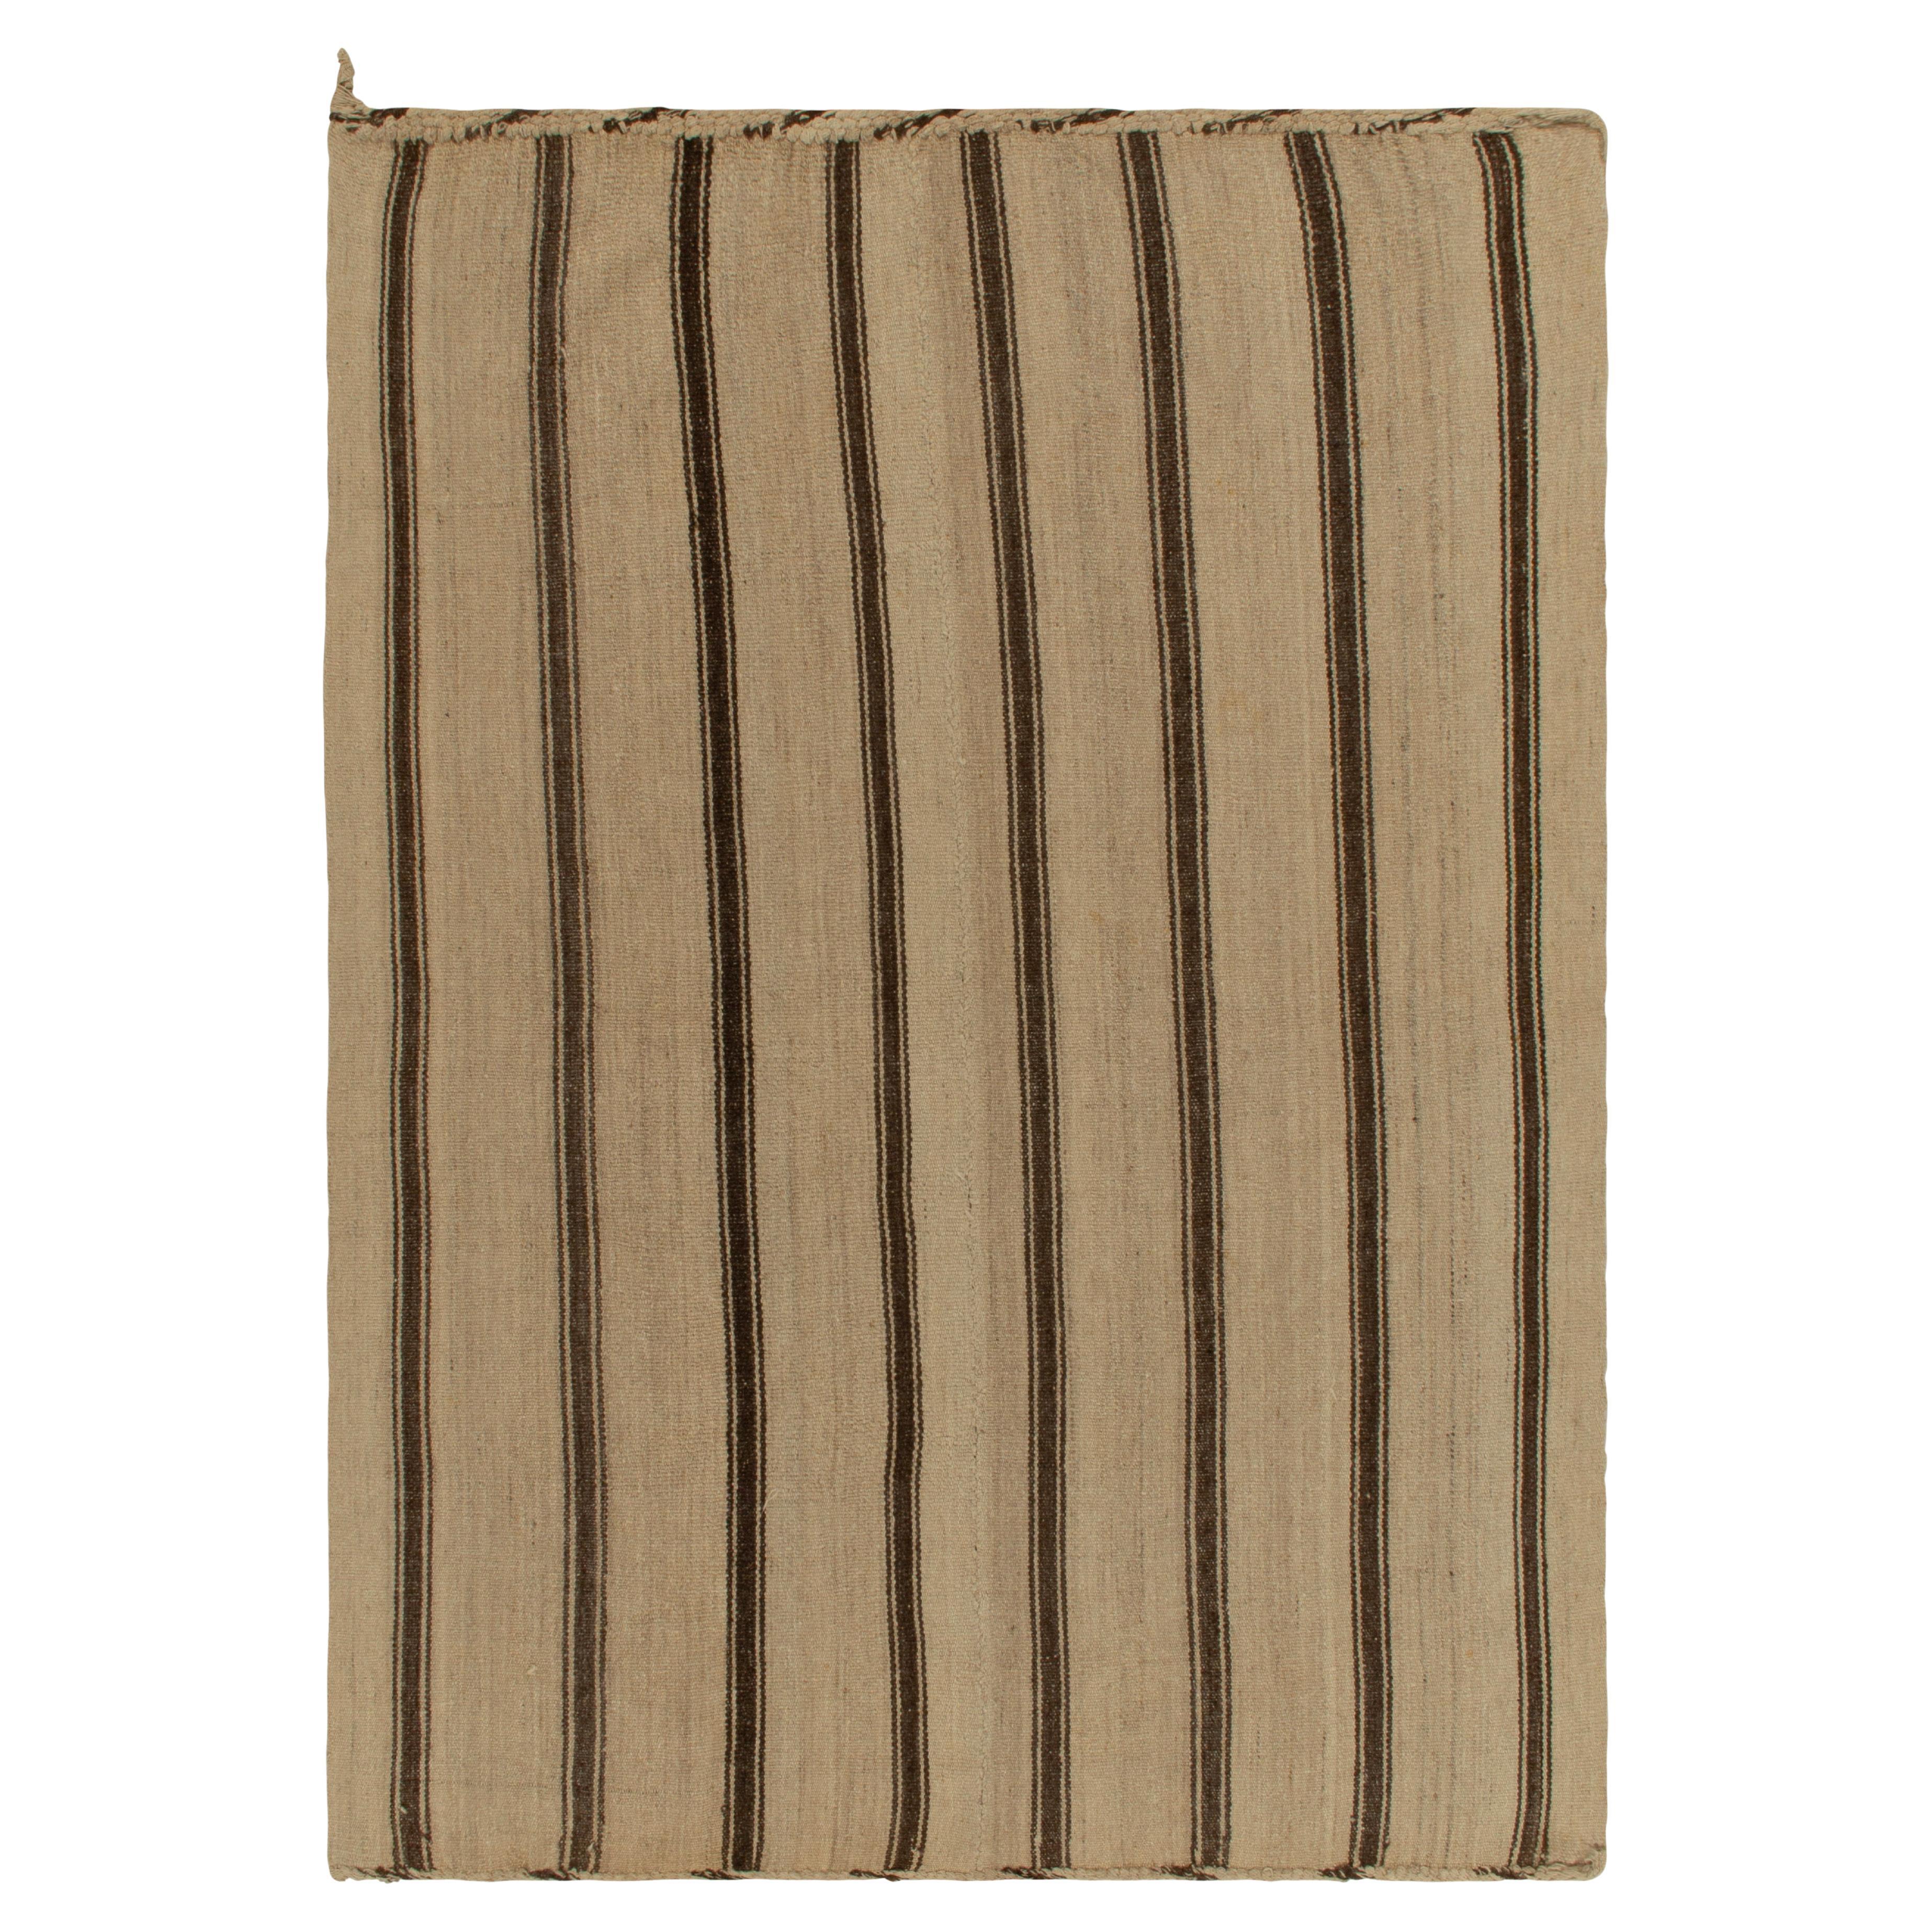 Handwoven Vintage Kilim Beige-Brown Stripe Patterns by Rug & Kilim For Sale